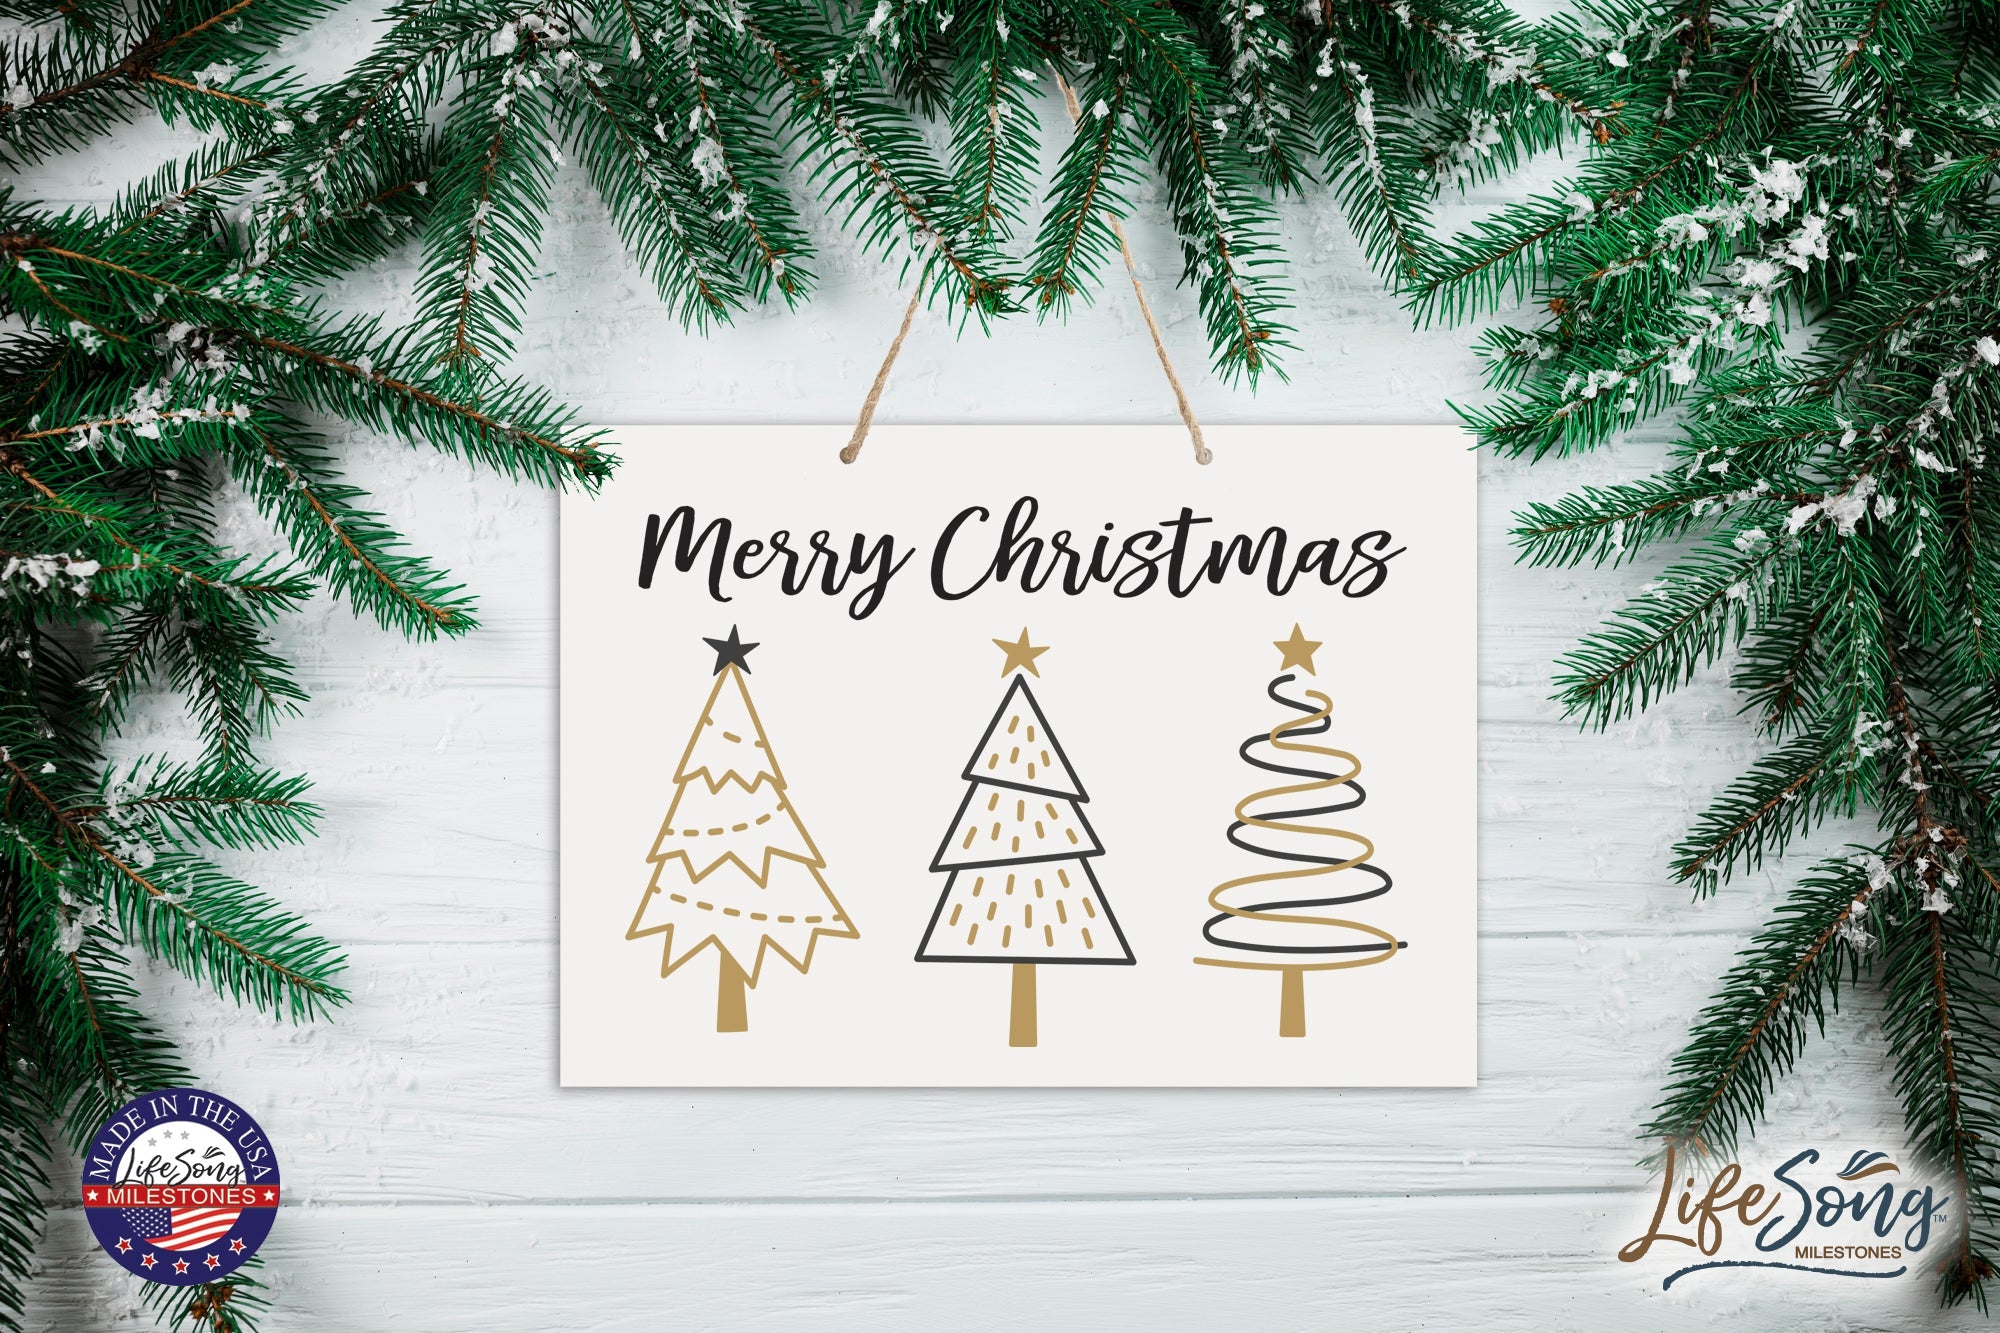 Merry Christmas Wall Hanging Sign - Merry Christmas Tree - LifeSong Milestones